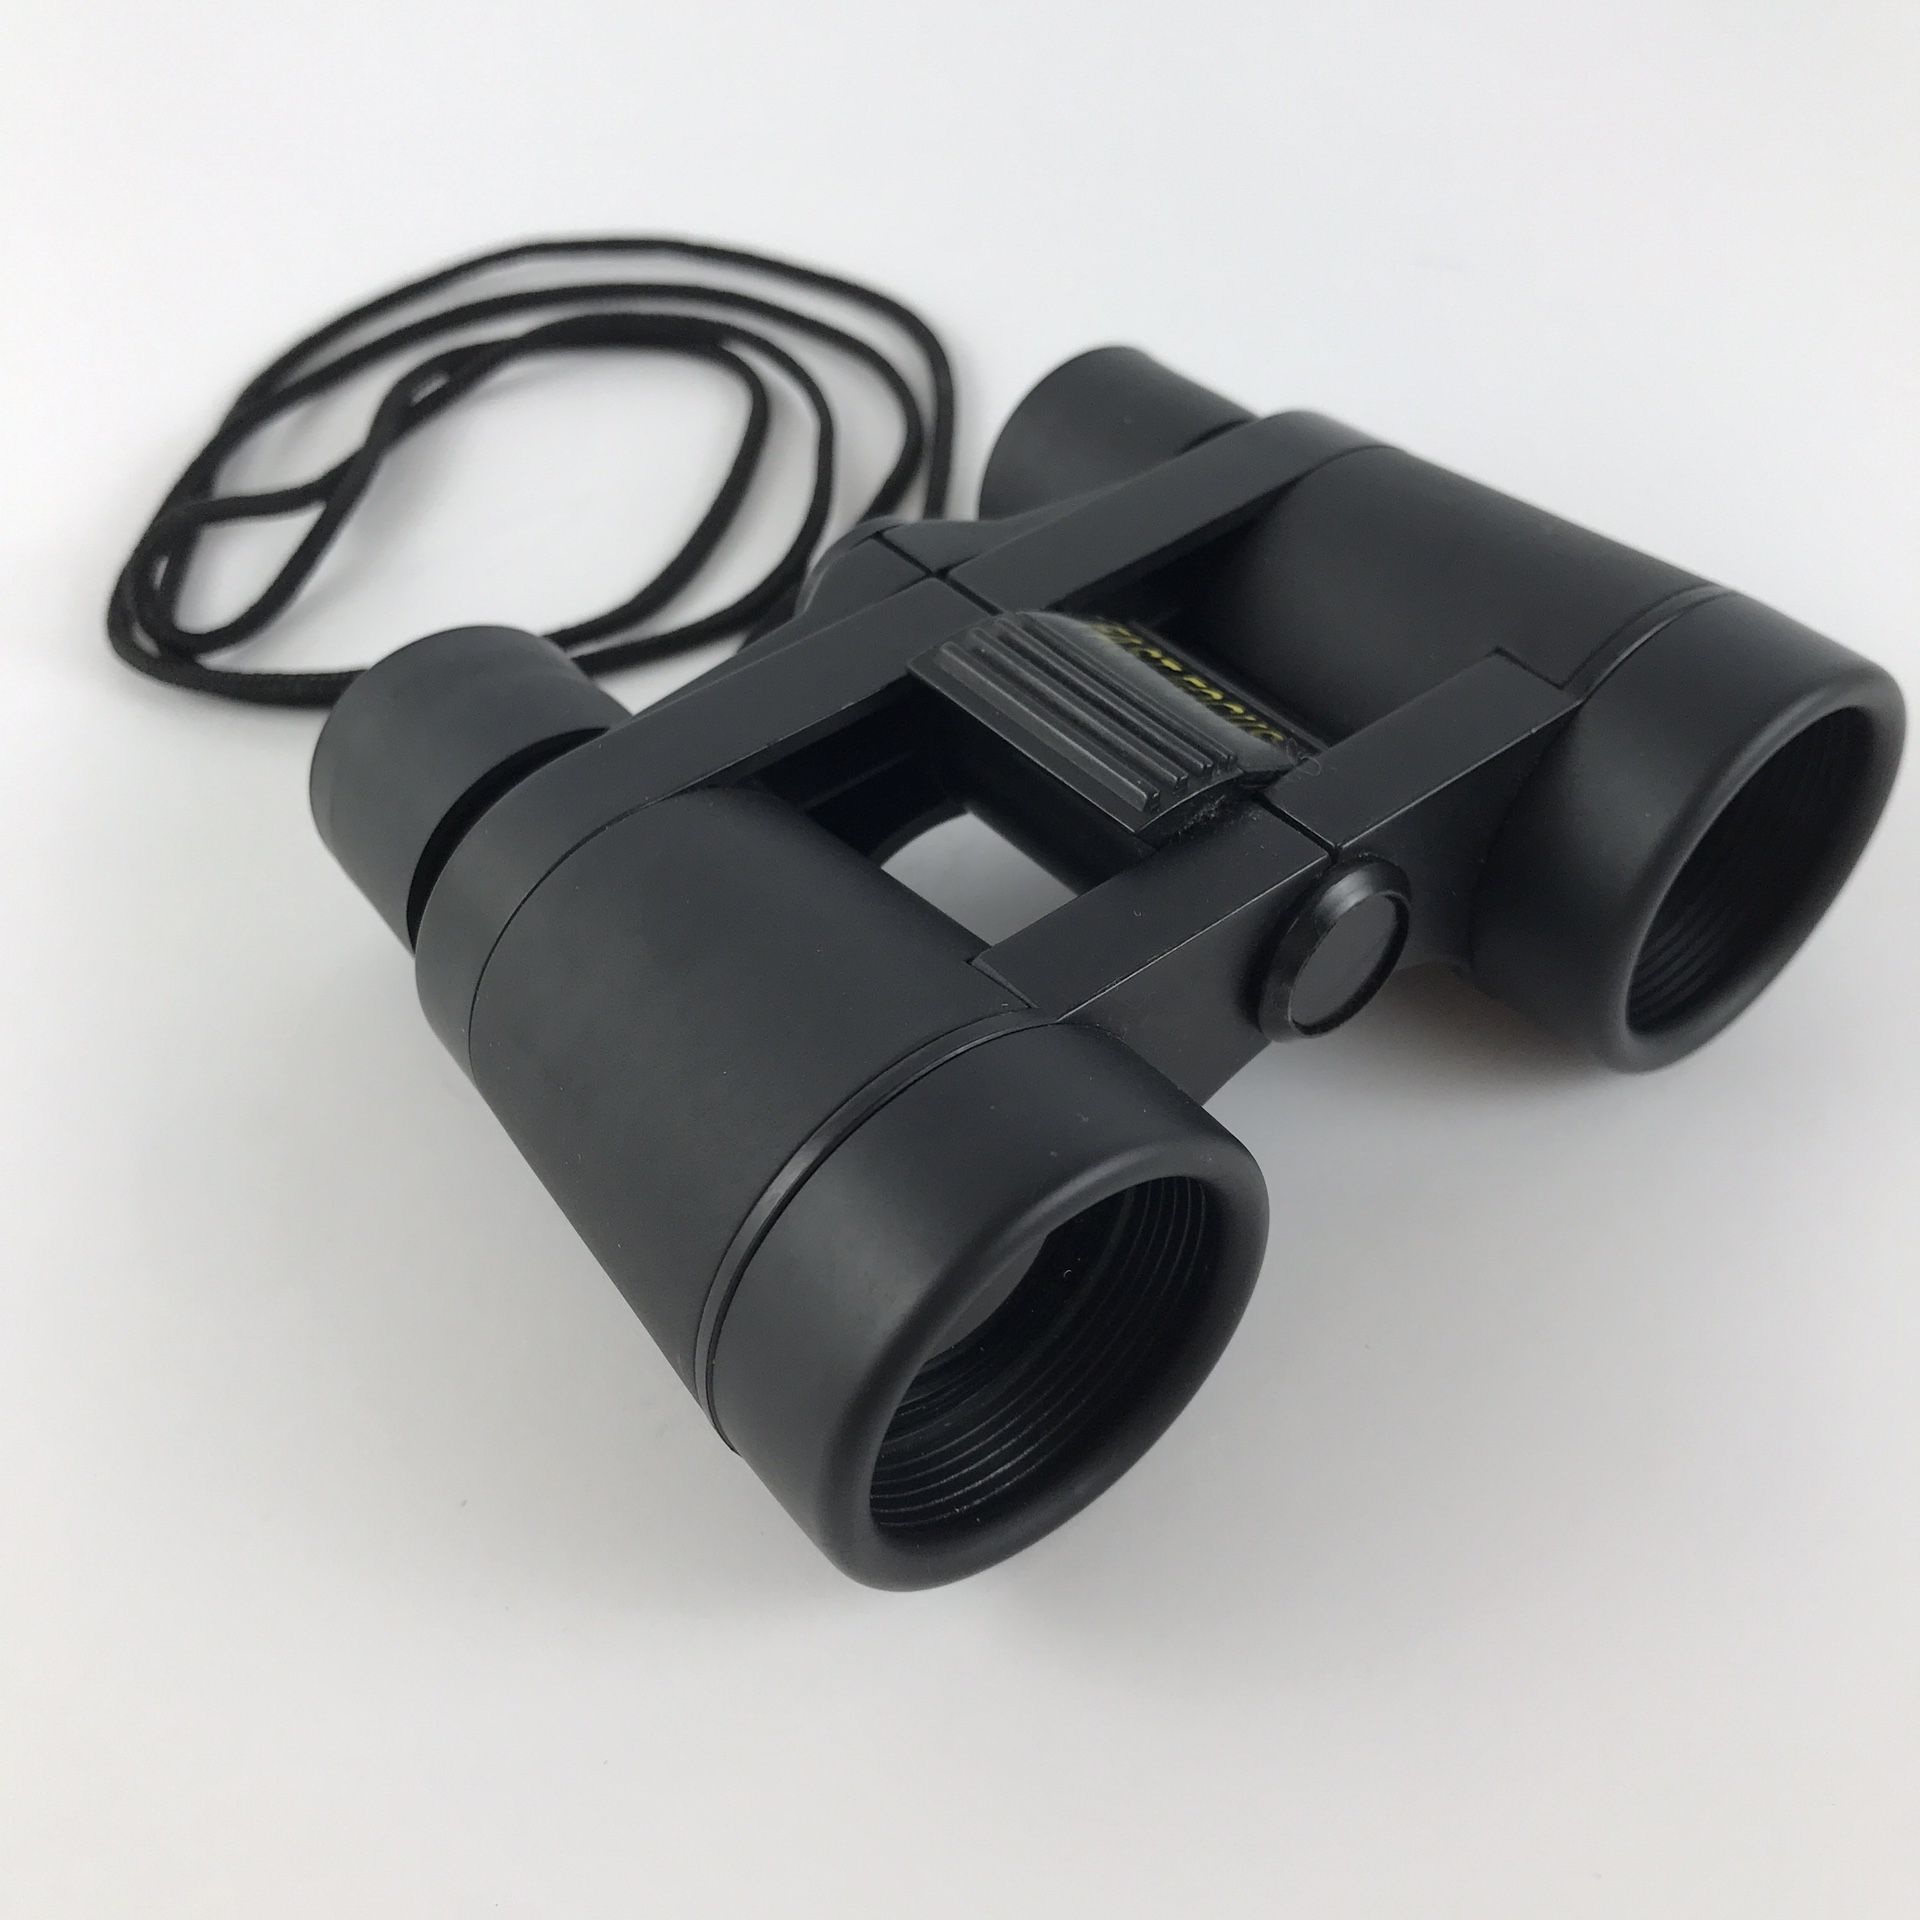 Fast Focus Binoculars Rubber and Plastic Lightweight 4x30 Coated